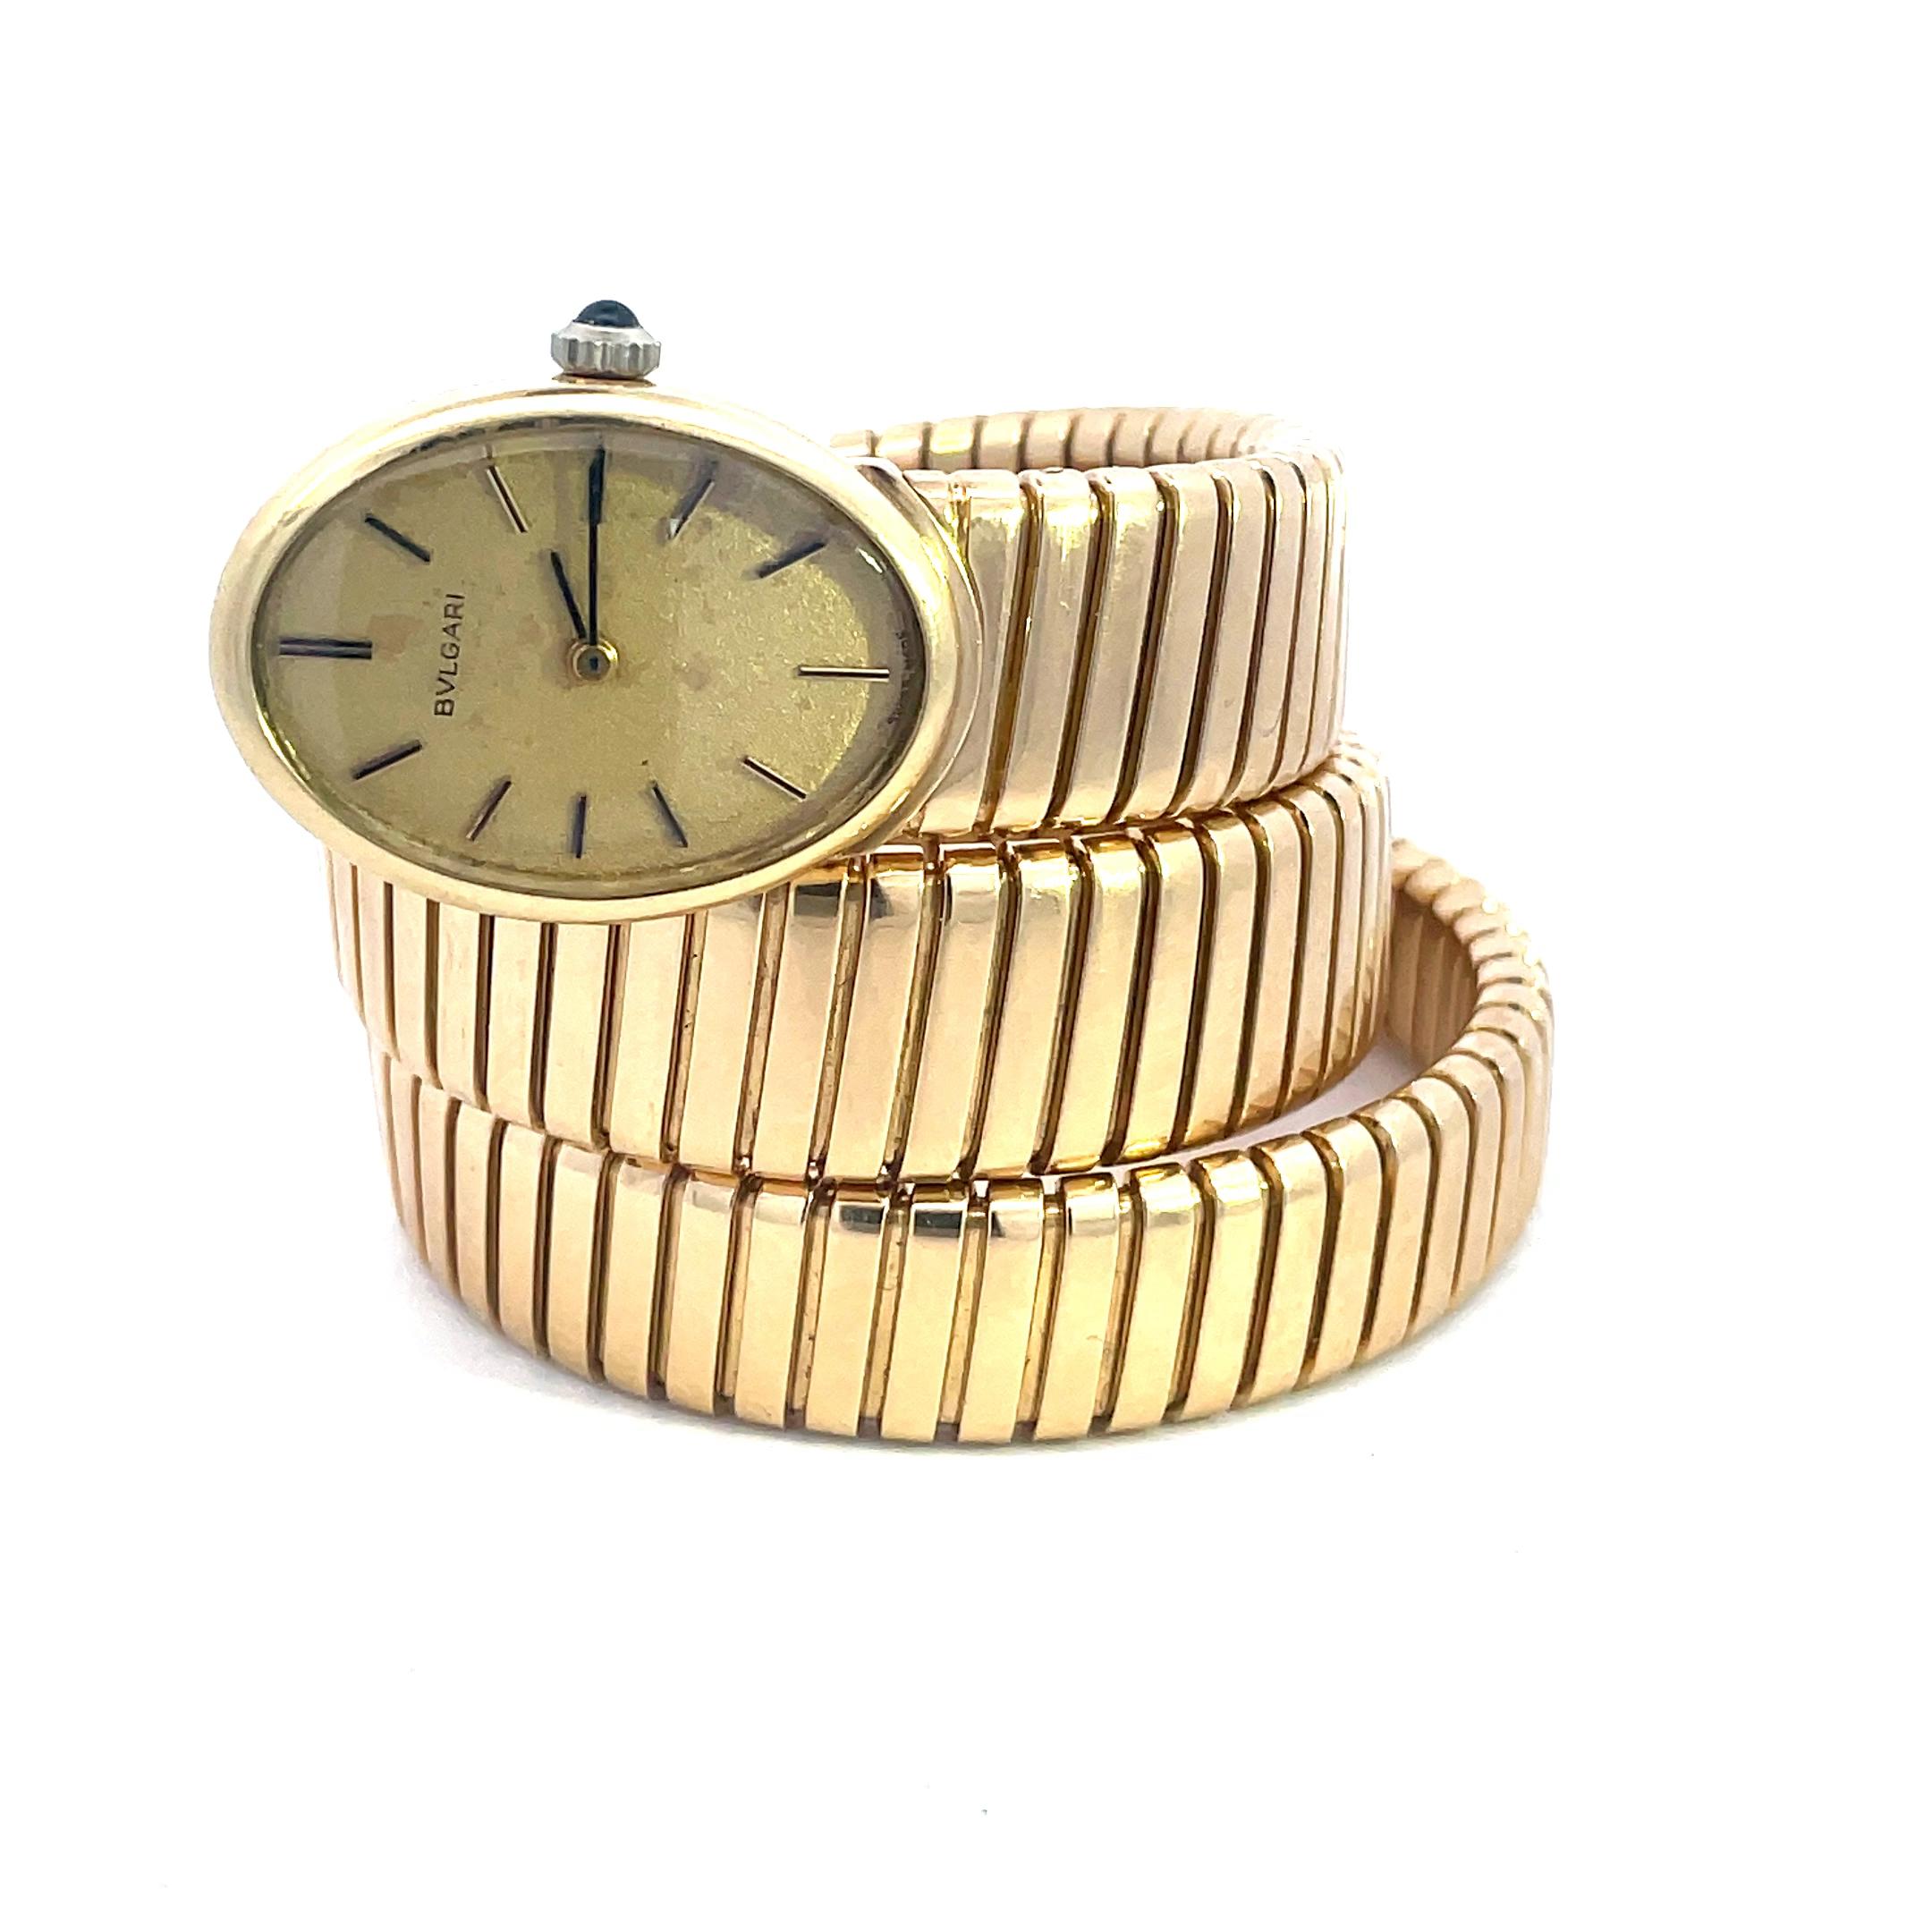 juvenia gold watch vintage